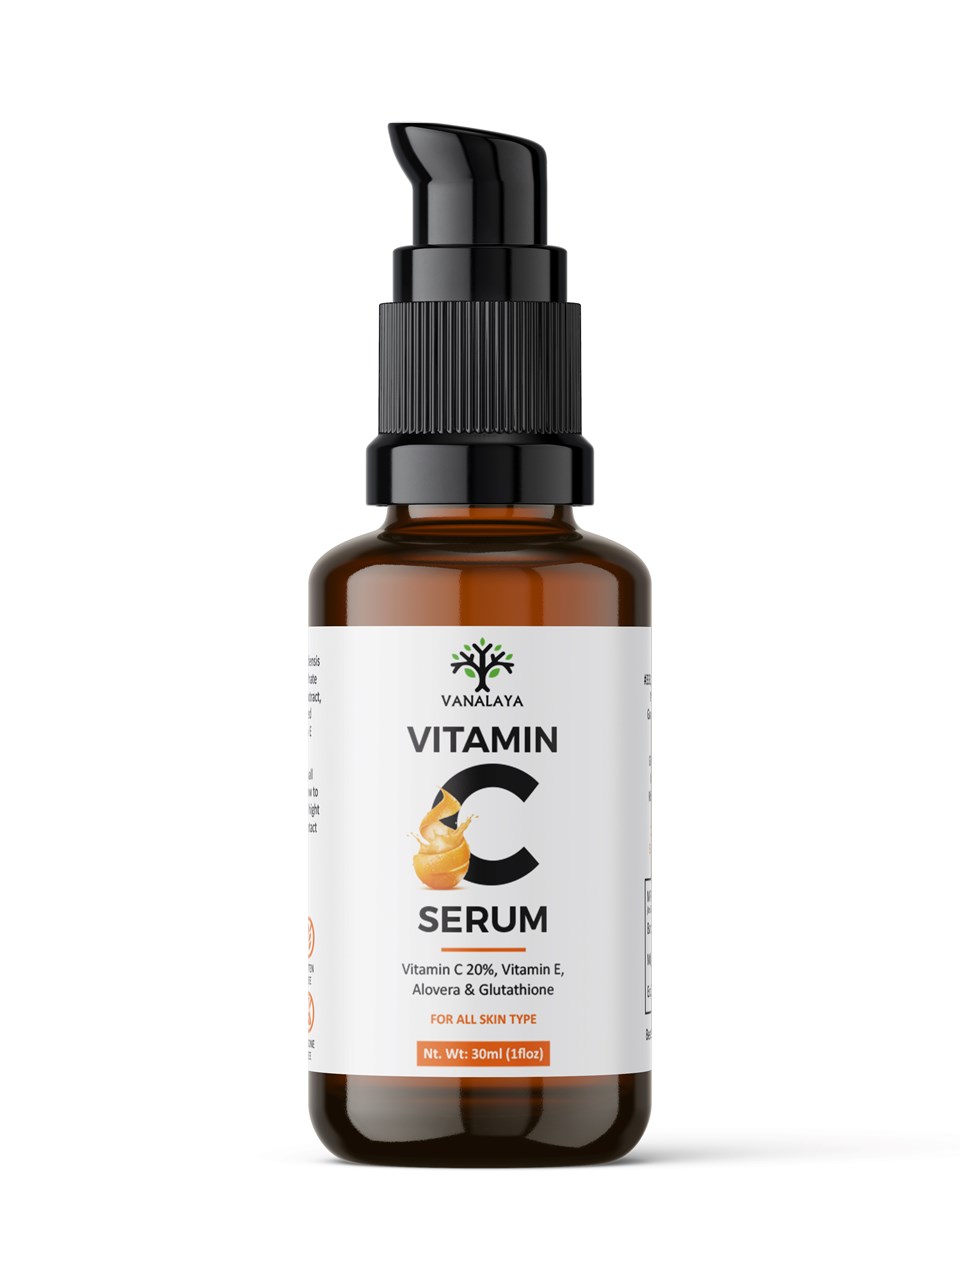 Picture of Vanalya Vitamin C Serum Skin Clearing Serum - For Anti-Aging Skin Repair, Dark Circle, Brightening, Supercharged Face Serum 1 FL Oz - 30 ML